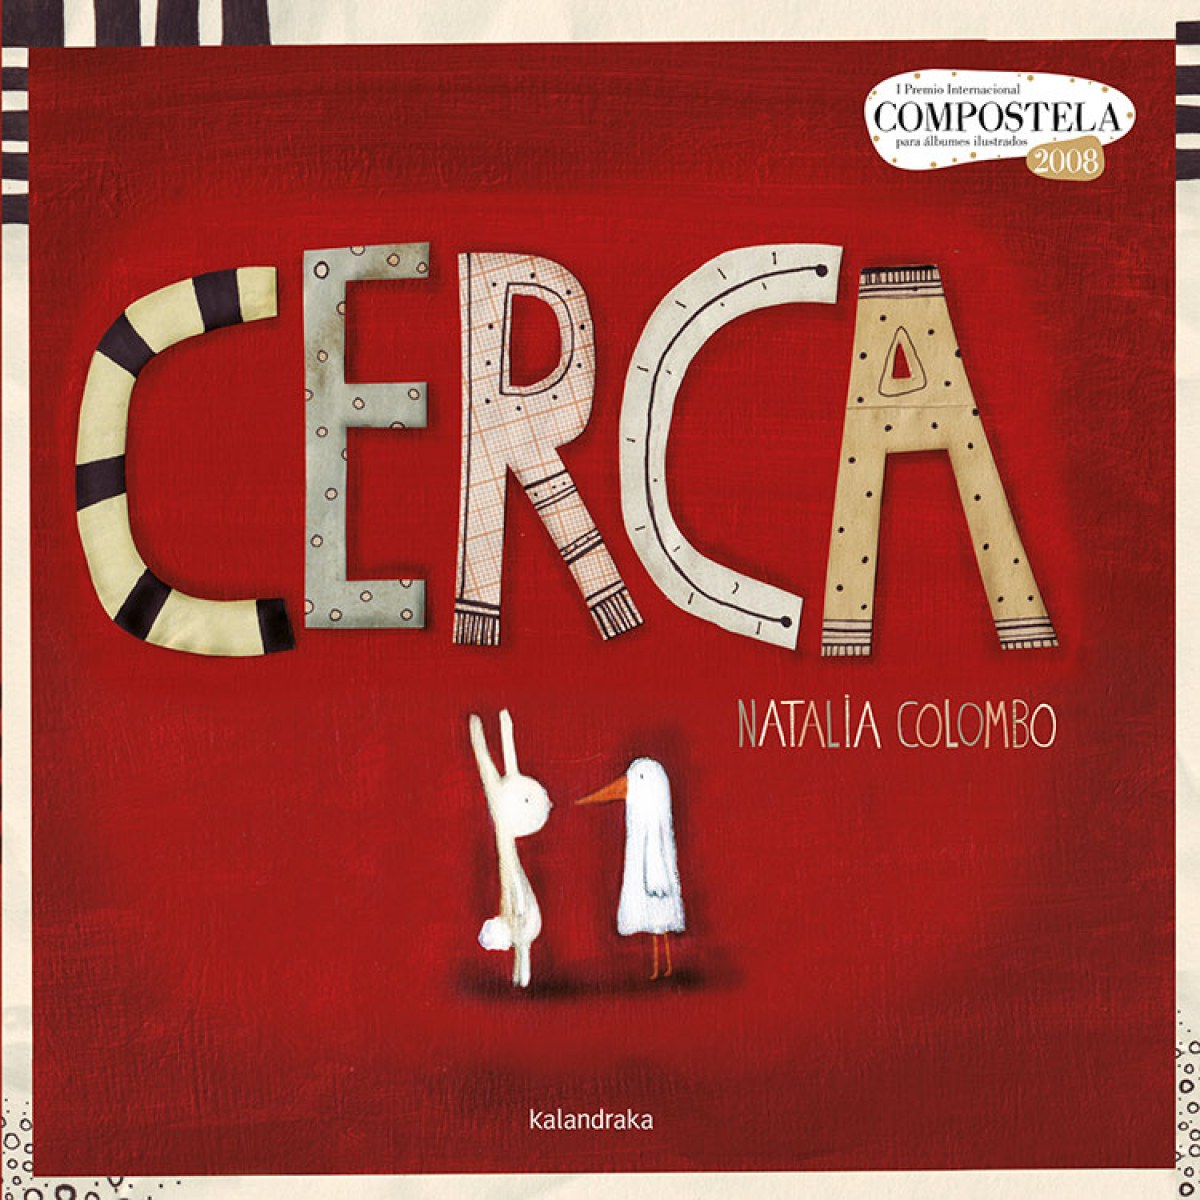 Cerca - Natalia Colombo